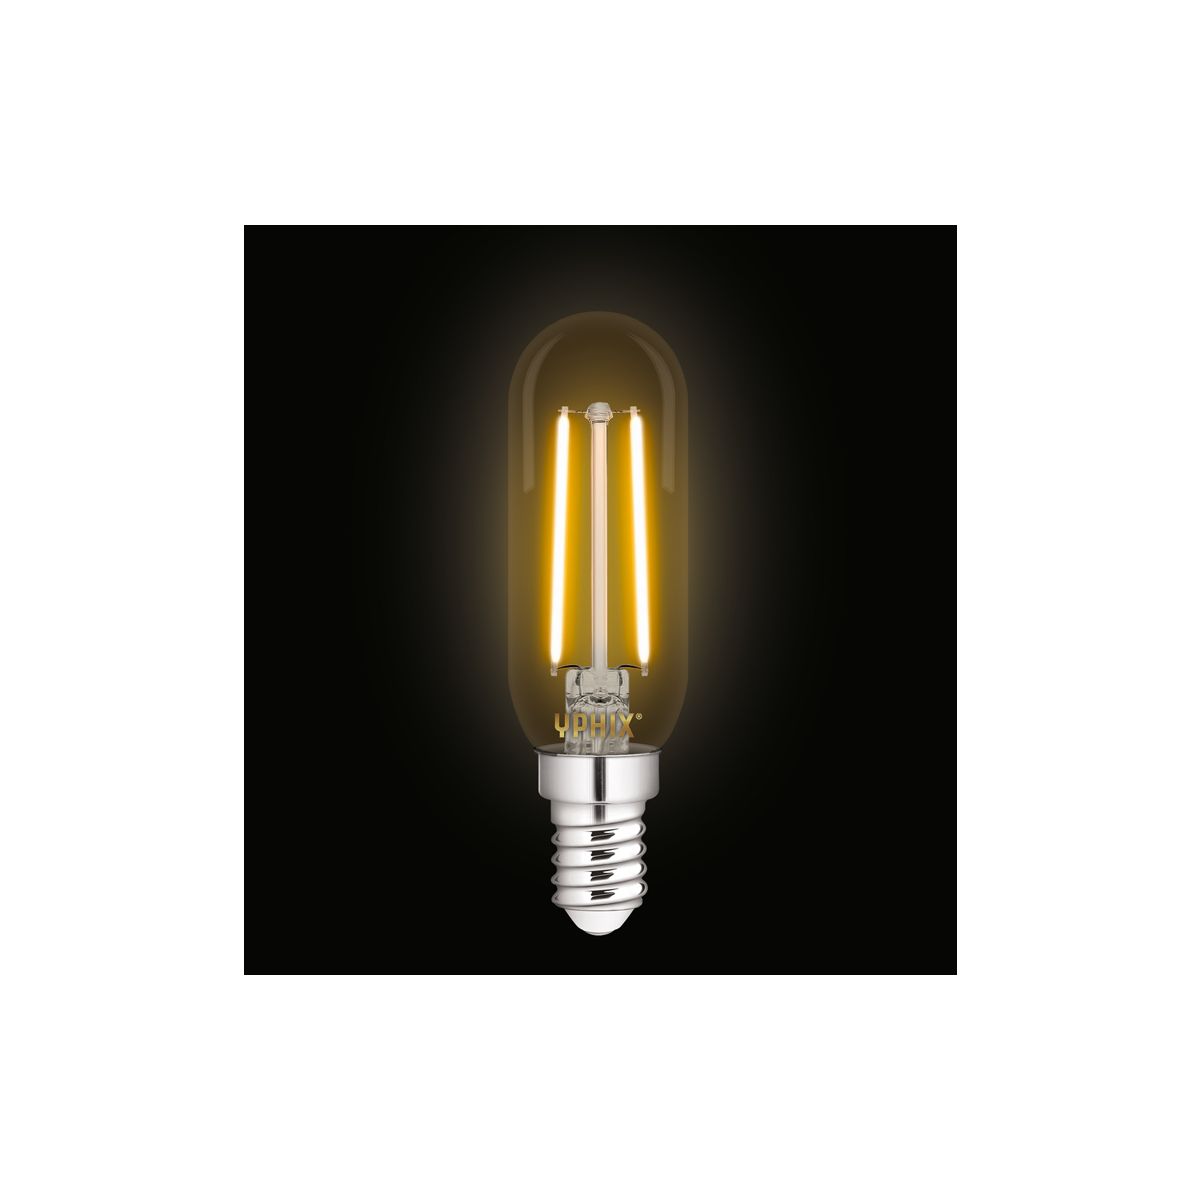 Yphix E14 LED filament Atlas 2.5 Watt Gold tube lamp, T25 dimmable  (Replaces 17W)